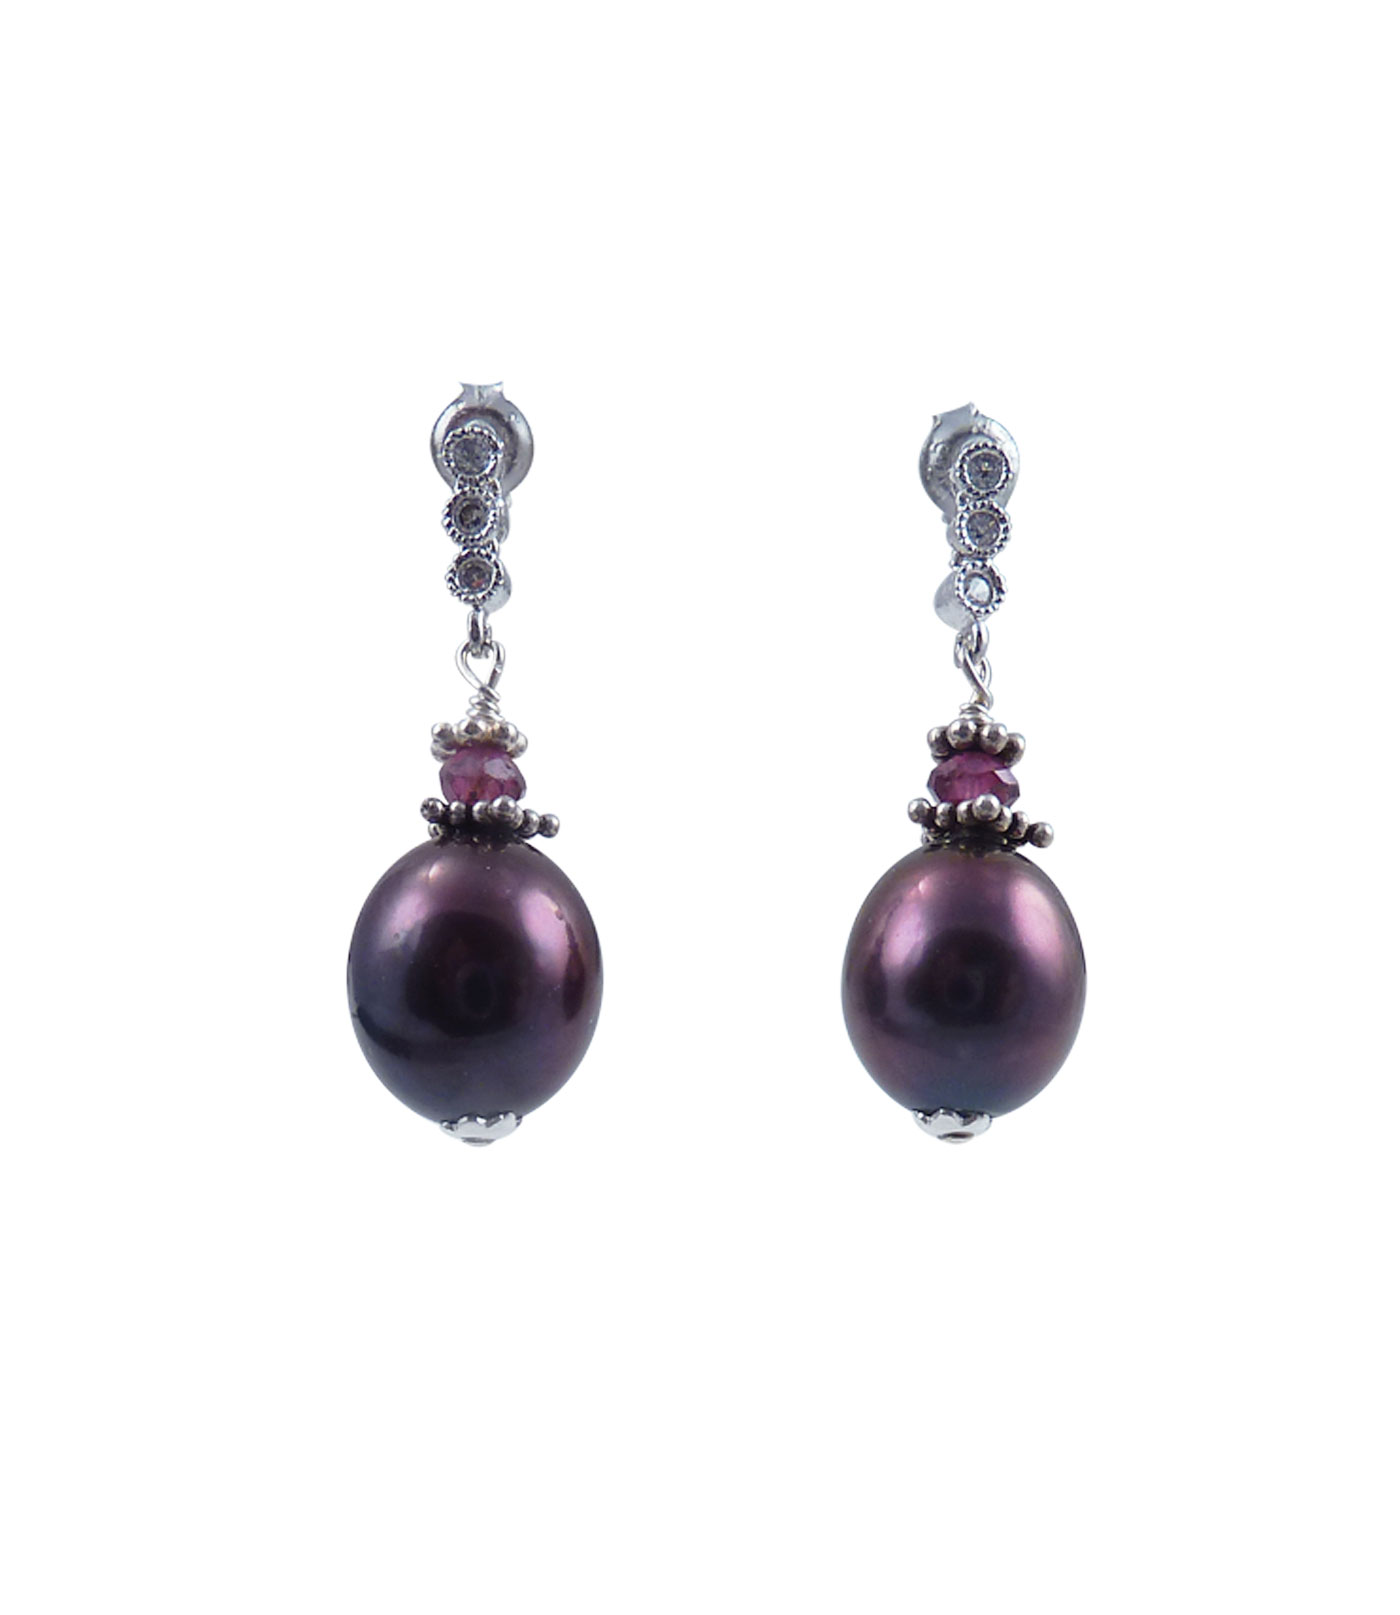 Pearl earrings black aubergine colored pearls. Modern pearl jewelry